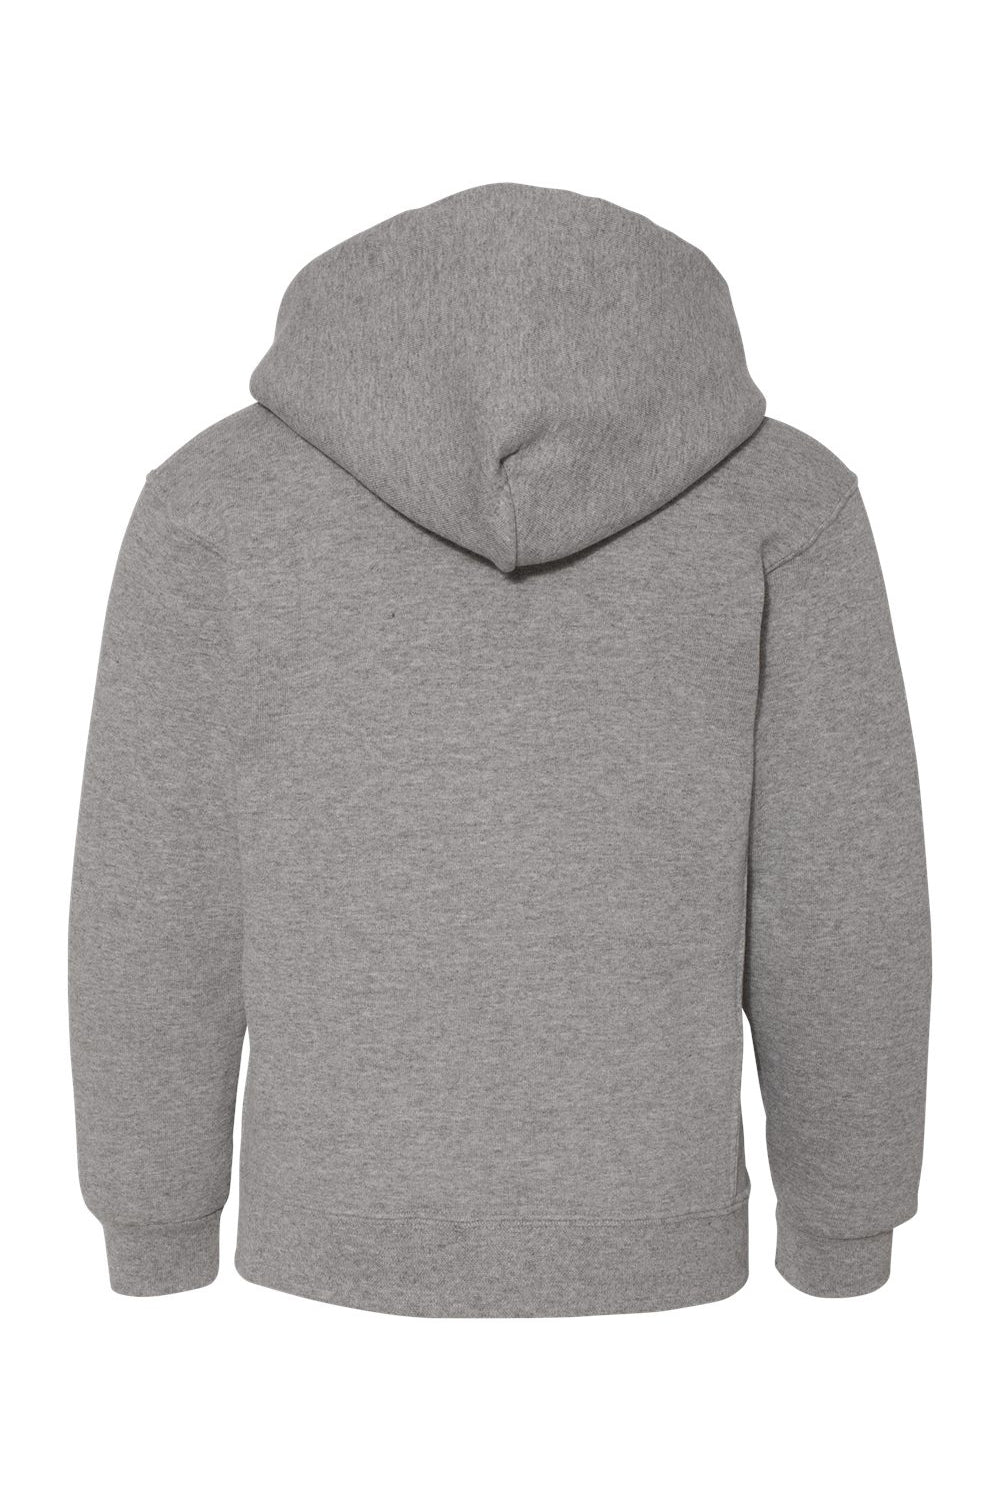 Russell Athletic 995HBB Youth Dri Power Hooded Sweatshirt Hoodie Oxford Grey Flat Back